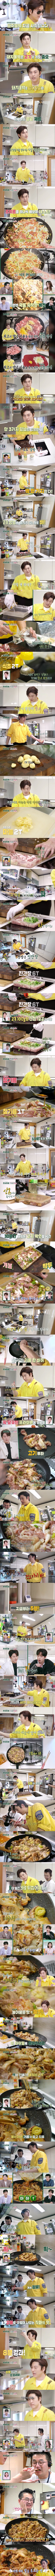 Ryu Soo-young (Mr. Eonam)’s recipe for pork bulbaek at Gisa Restaurant